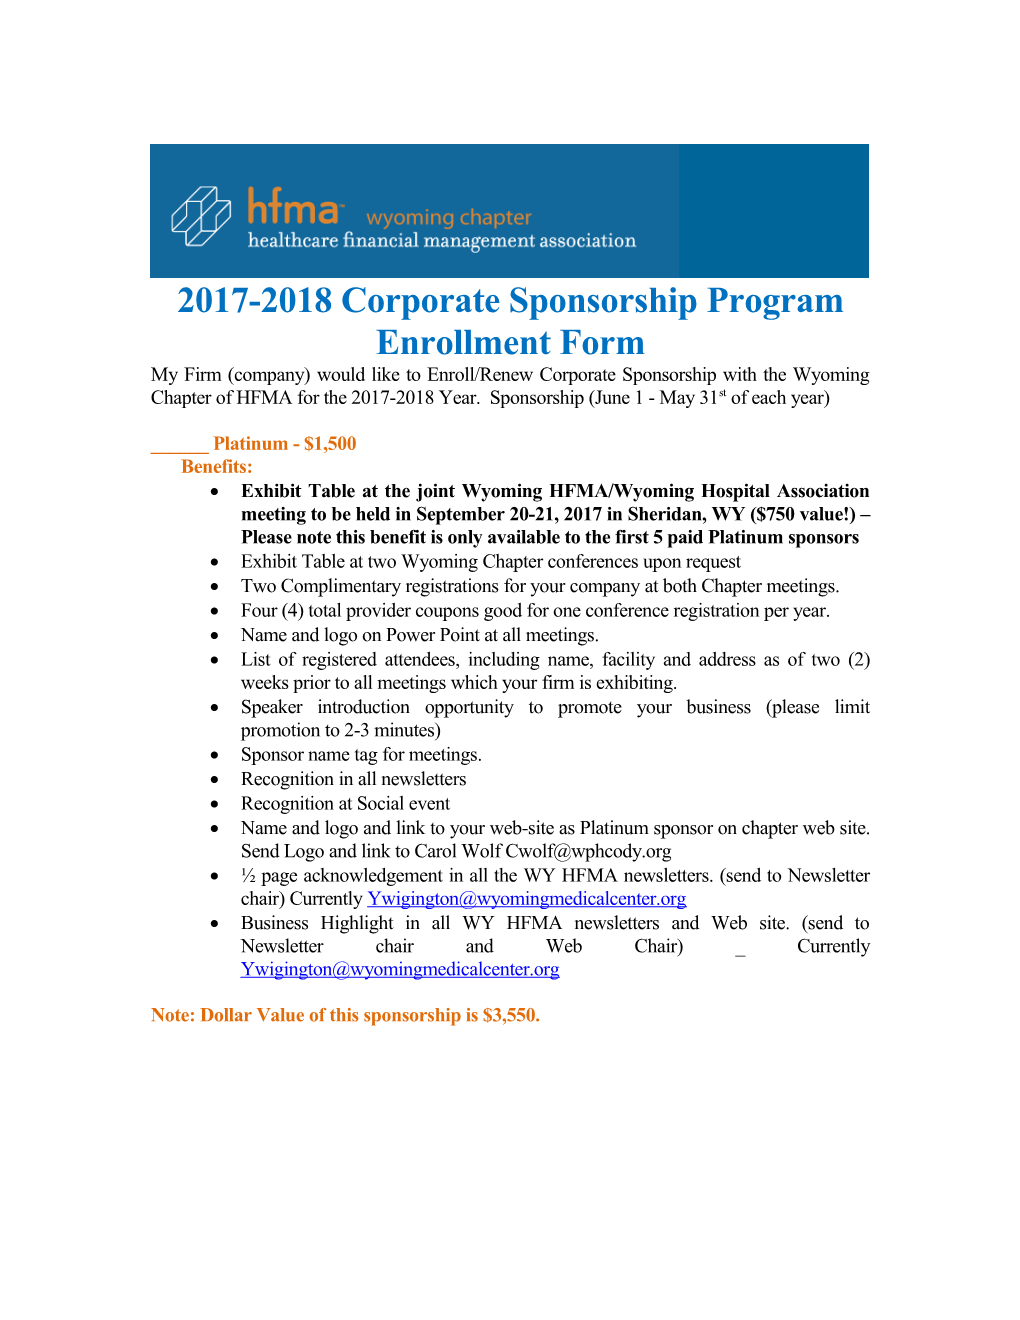 2017-2018 Corporate Sponsorship Program Enrollment Form